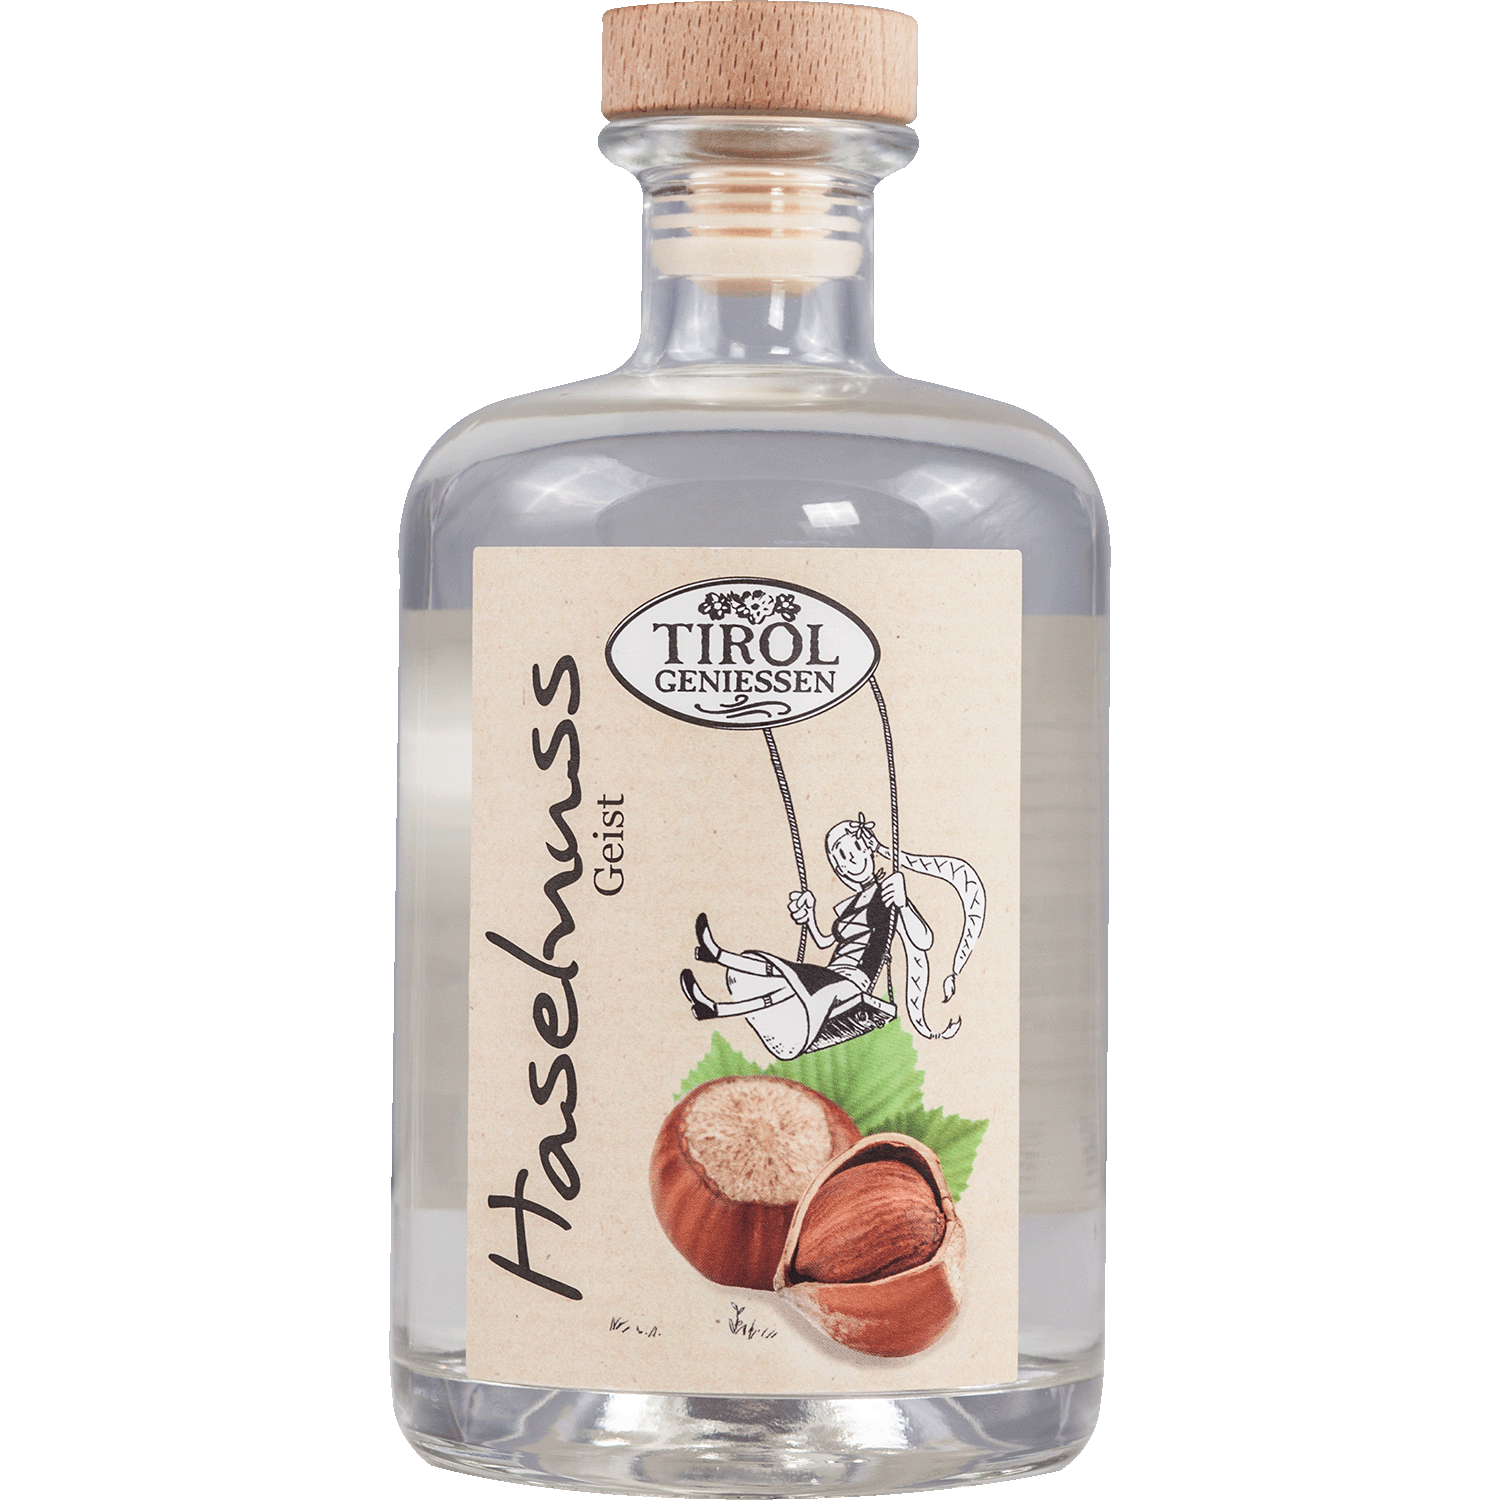 Tyrolean Hazelnut Spirit in gift bottle from Austria from Tirol Geniessen